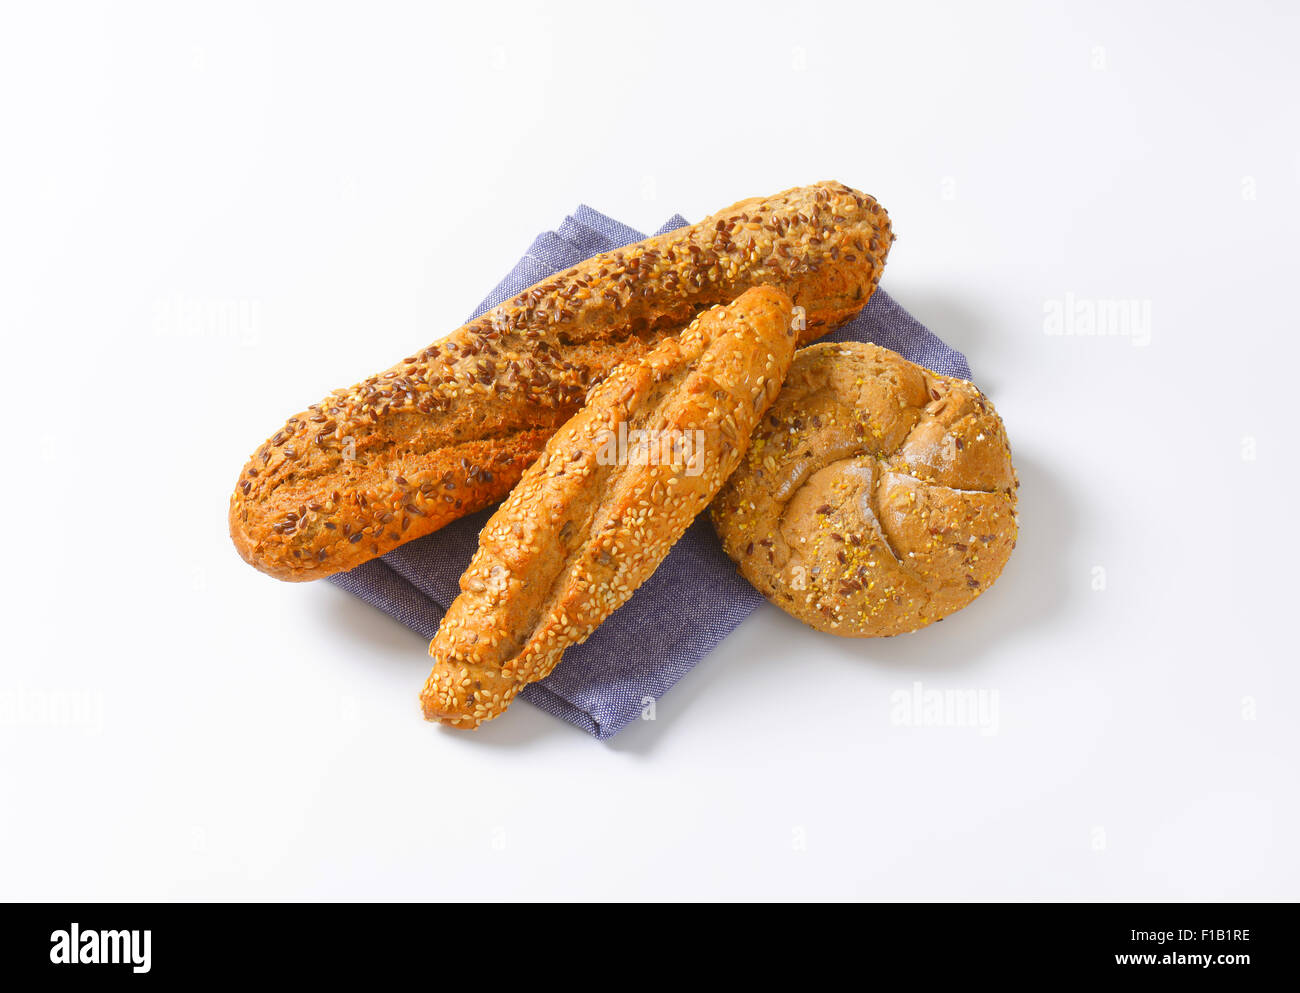 assorted bread rolls on blue napkin Stock Photo